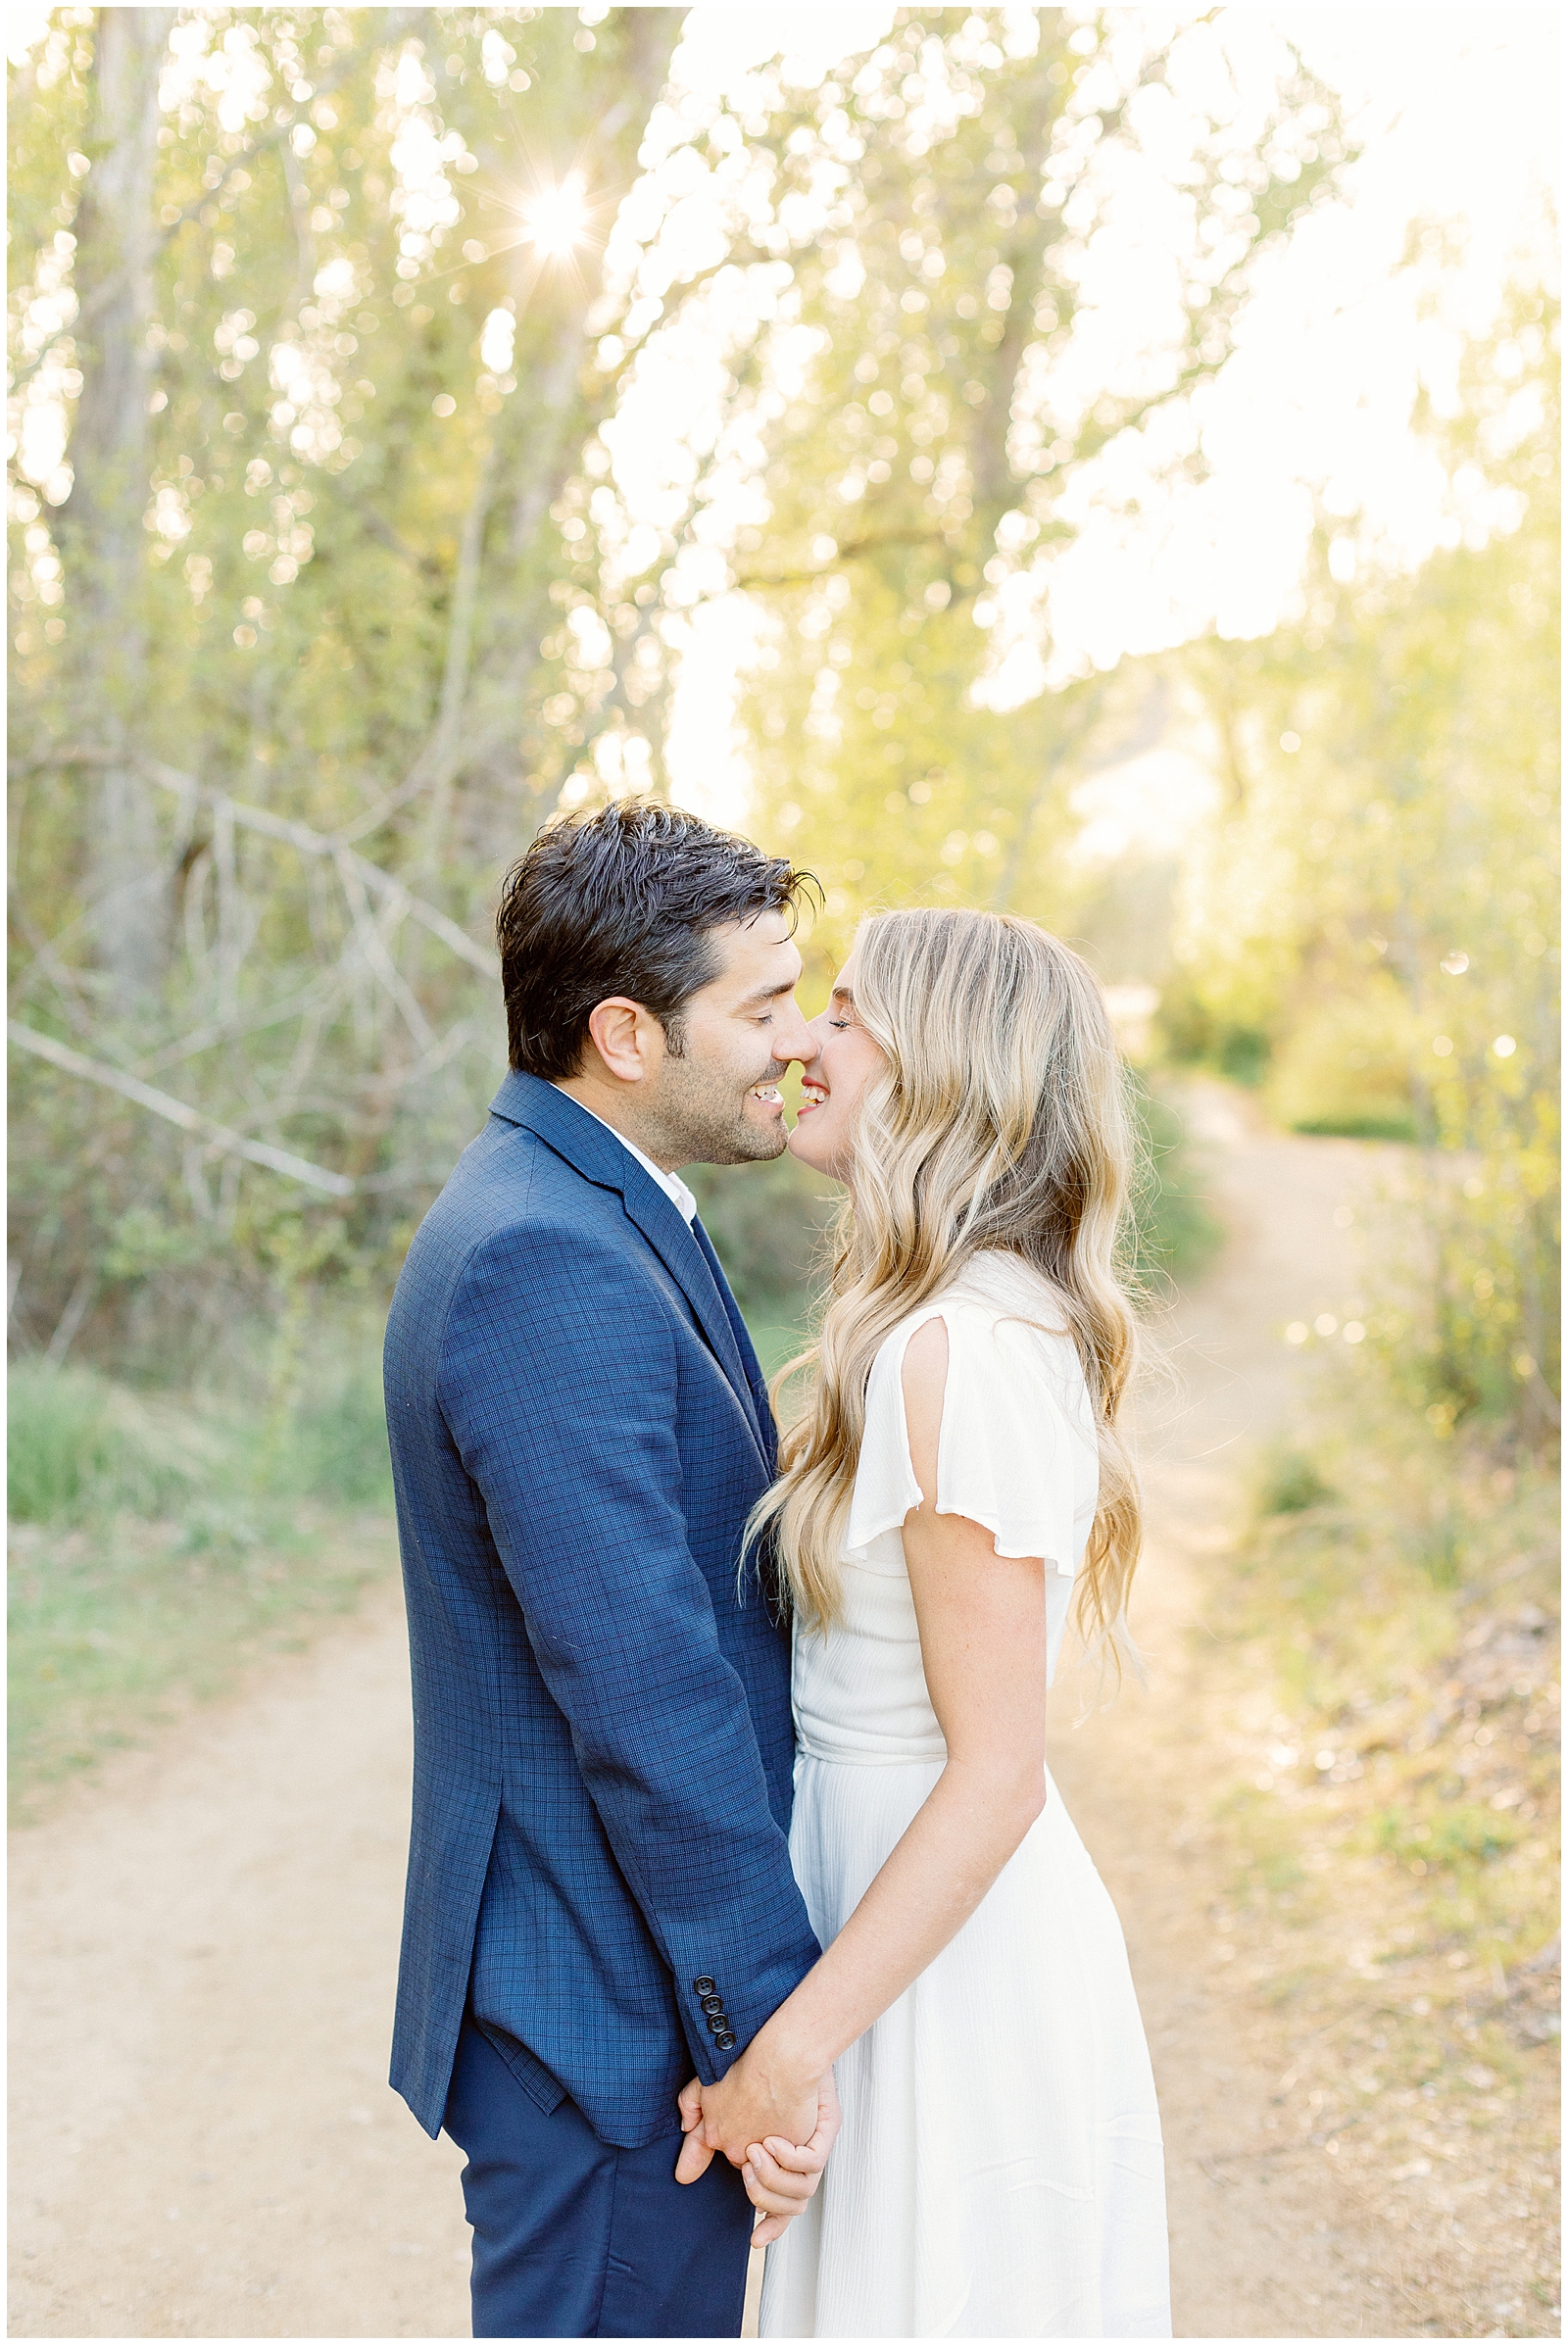 Couple Giggling after a Kiss - Elegant Boise Foothills Engagement Session - Boise Idaho Wedding Photographers